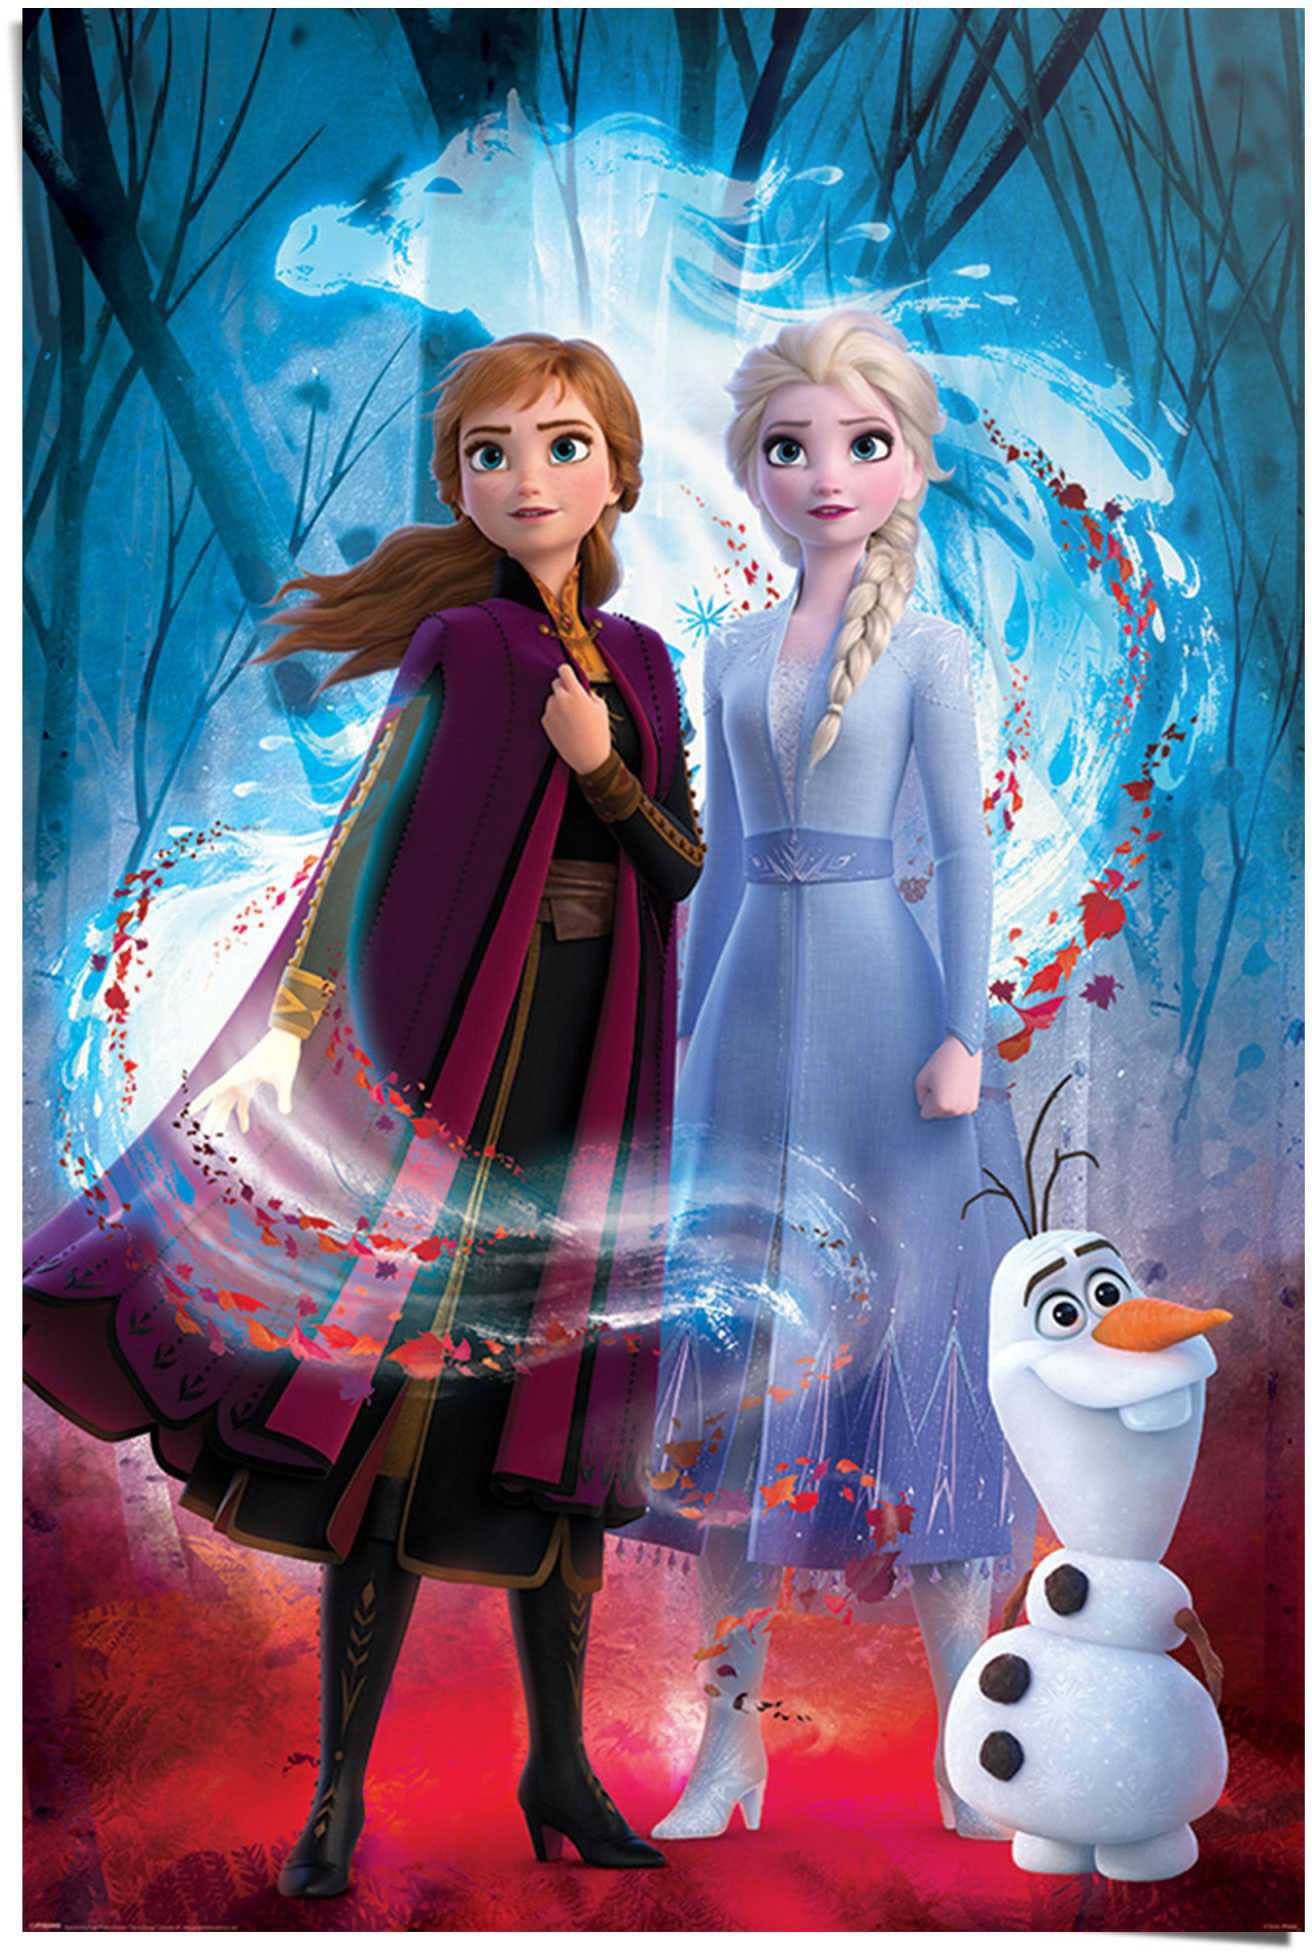 Reinders! Poster »Poster Frozen Anna OTTO St.) - - Film, Olaf (1 bei Elsa Disney«, 2 